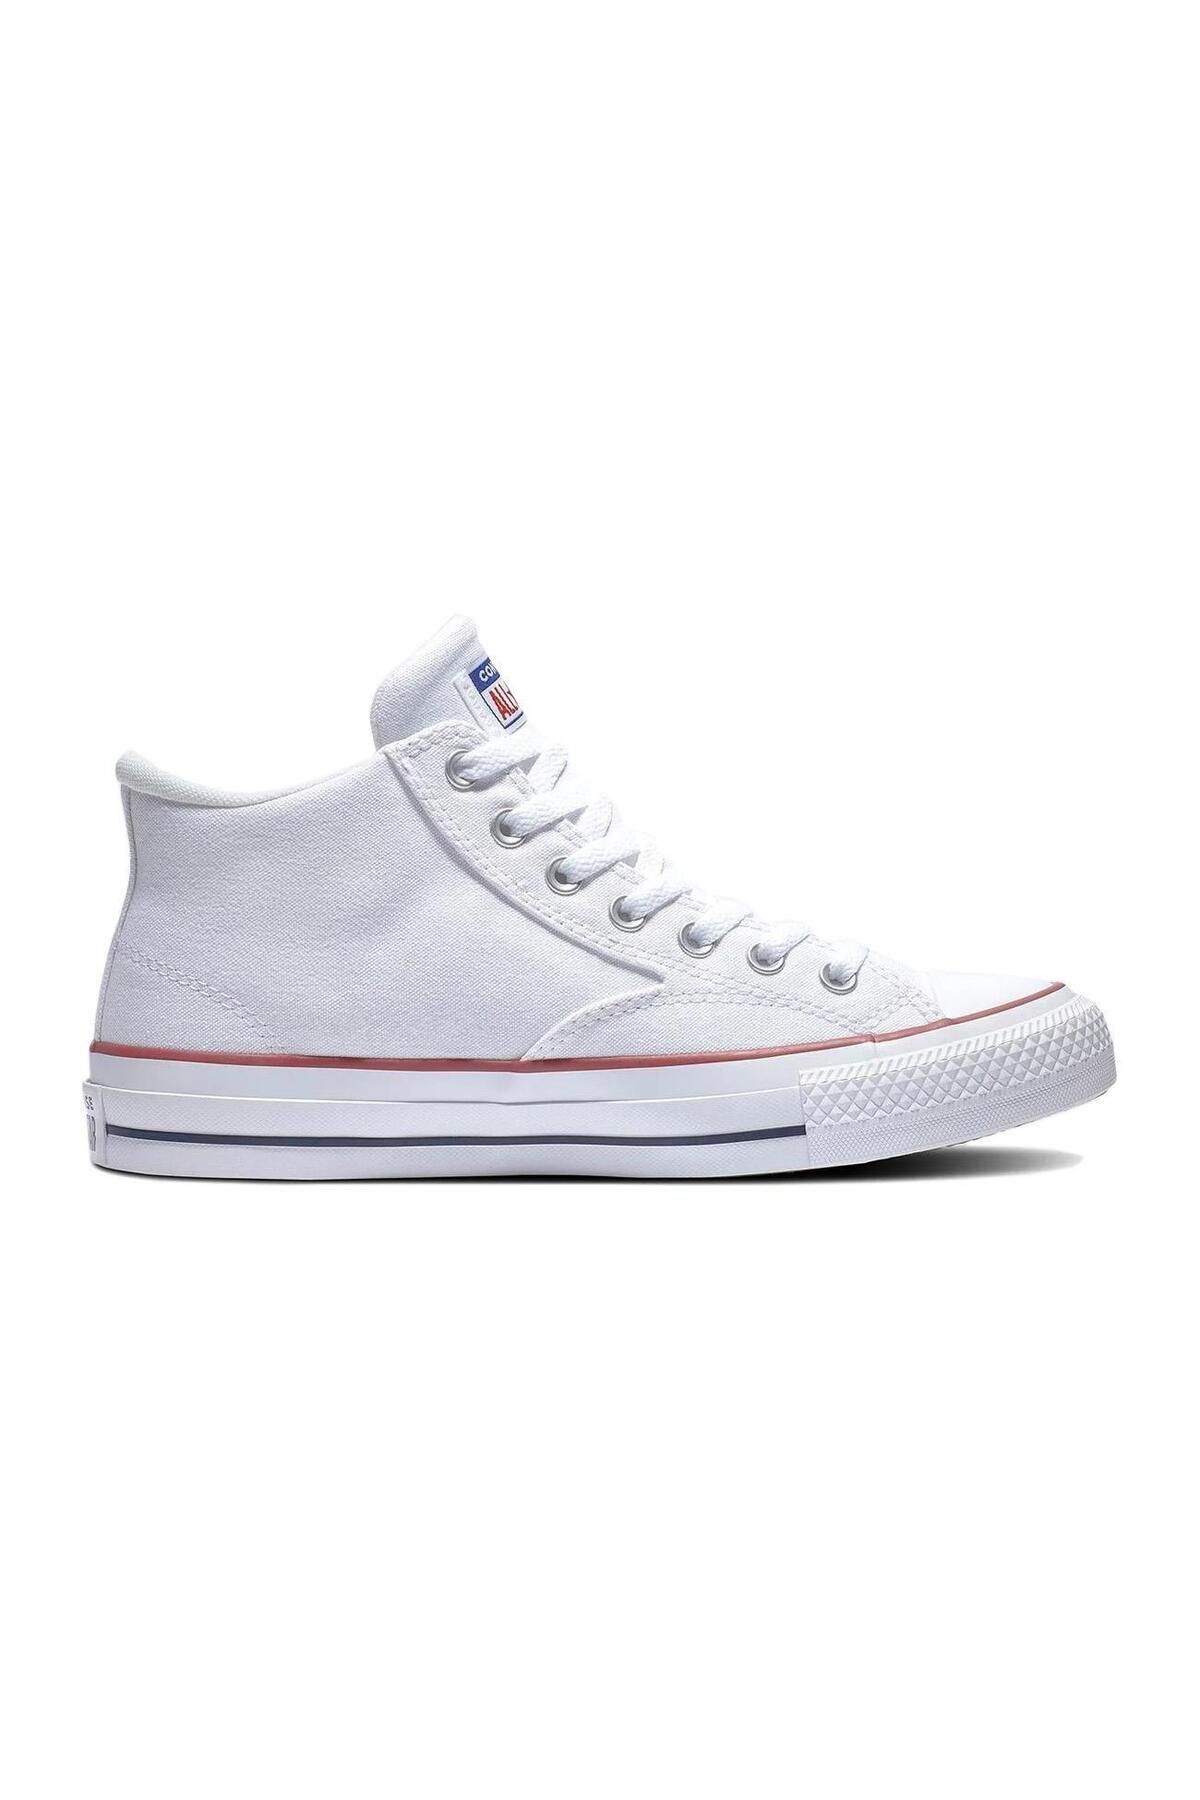 Converse A00812c Ayakkabı Beyaz